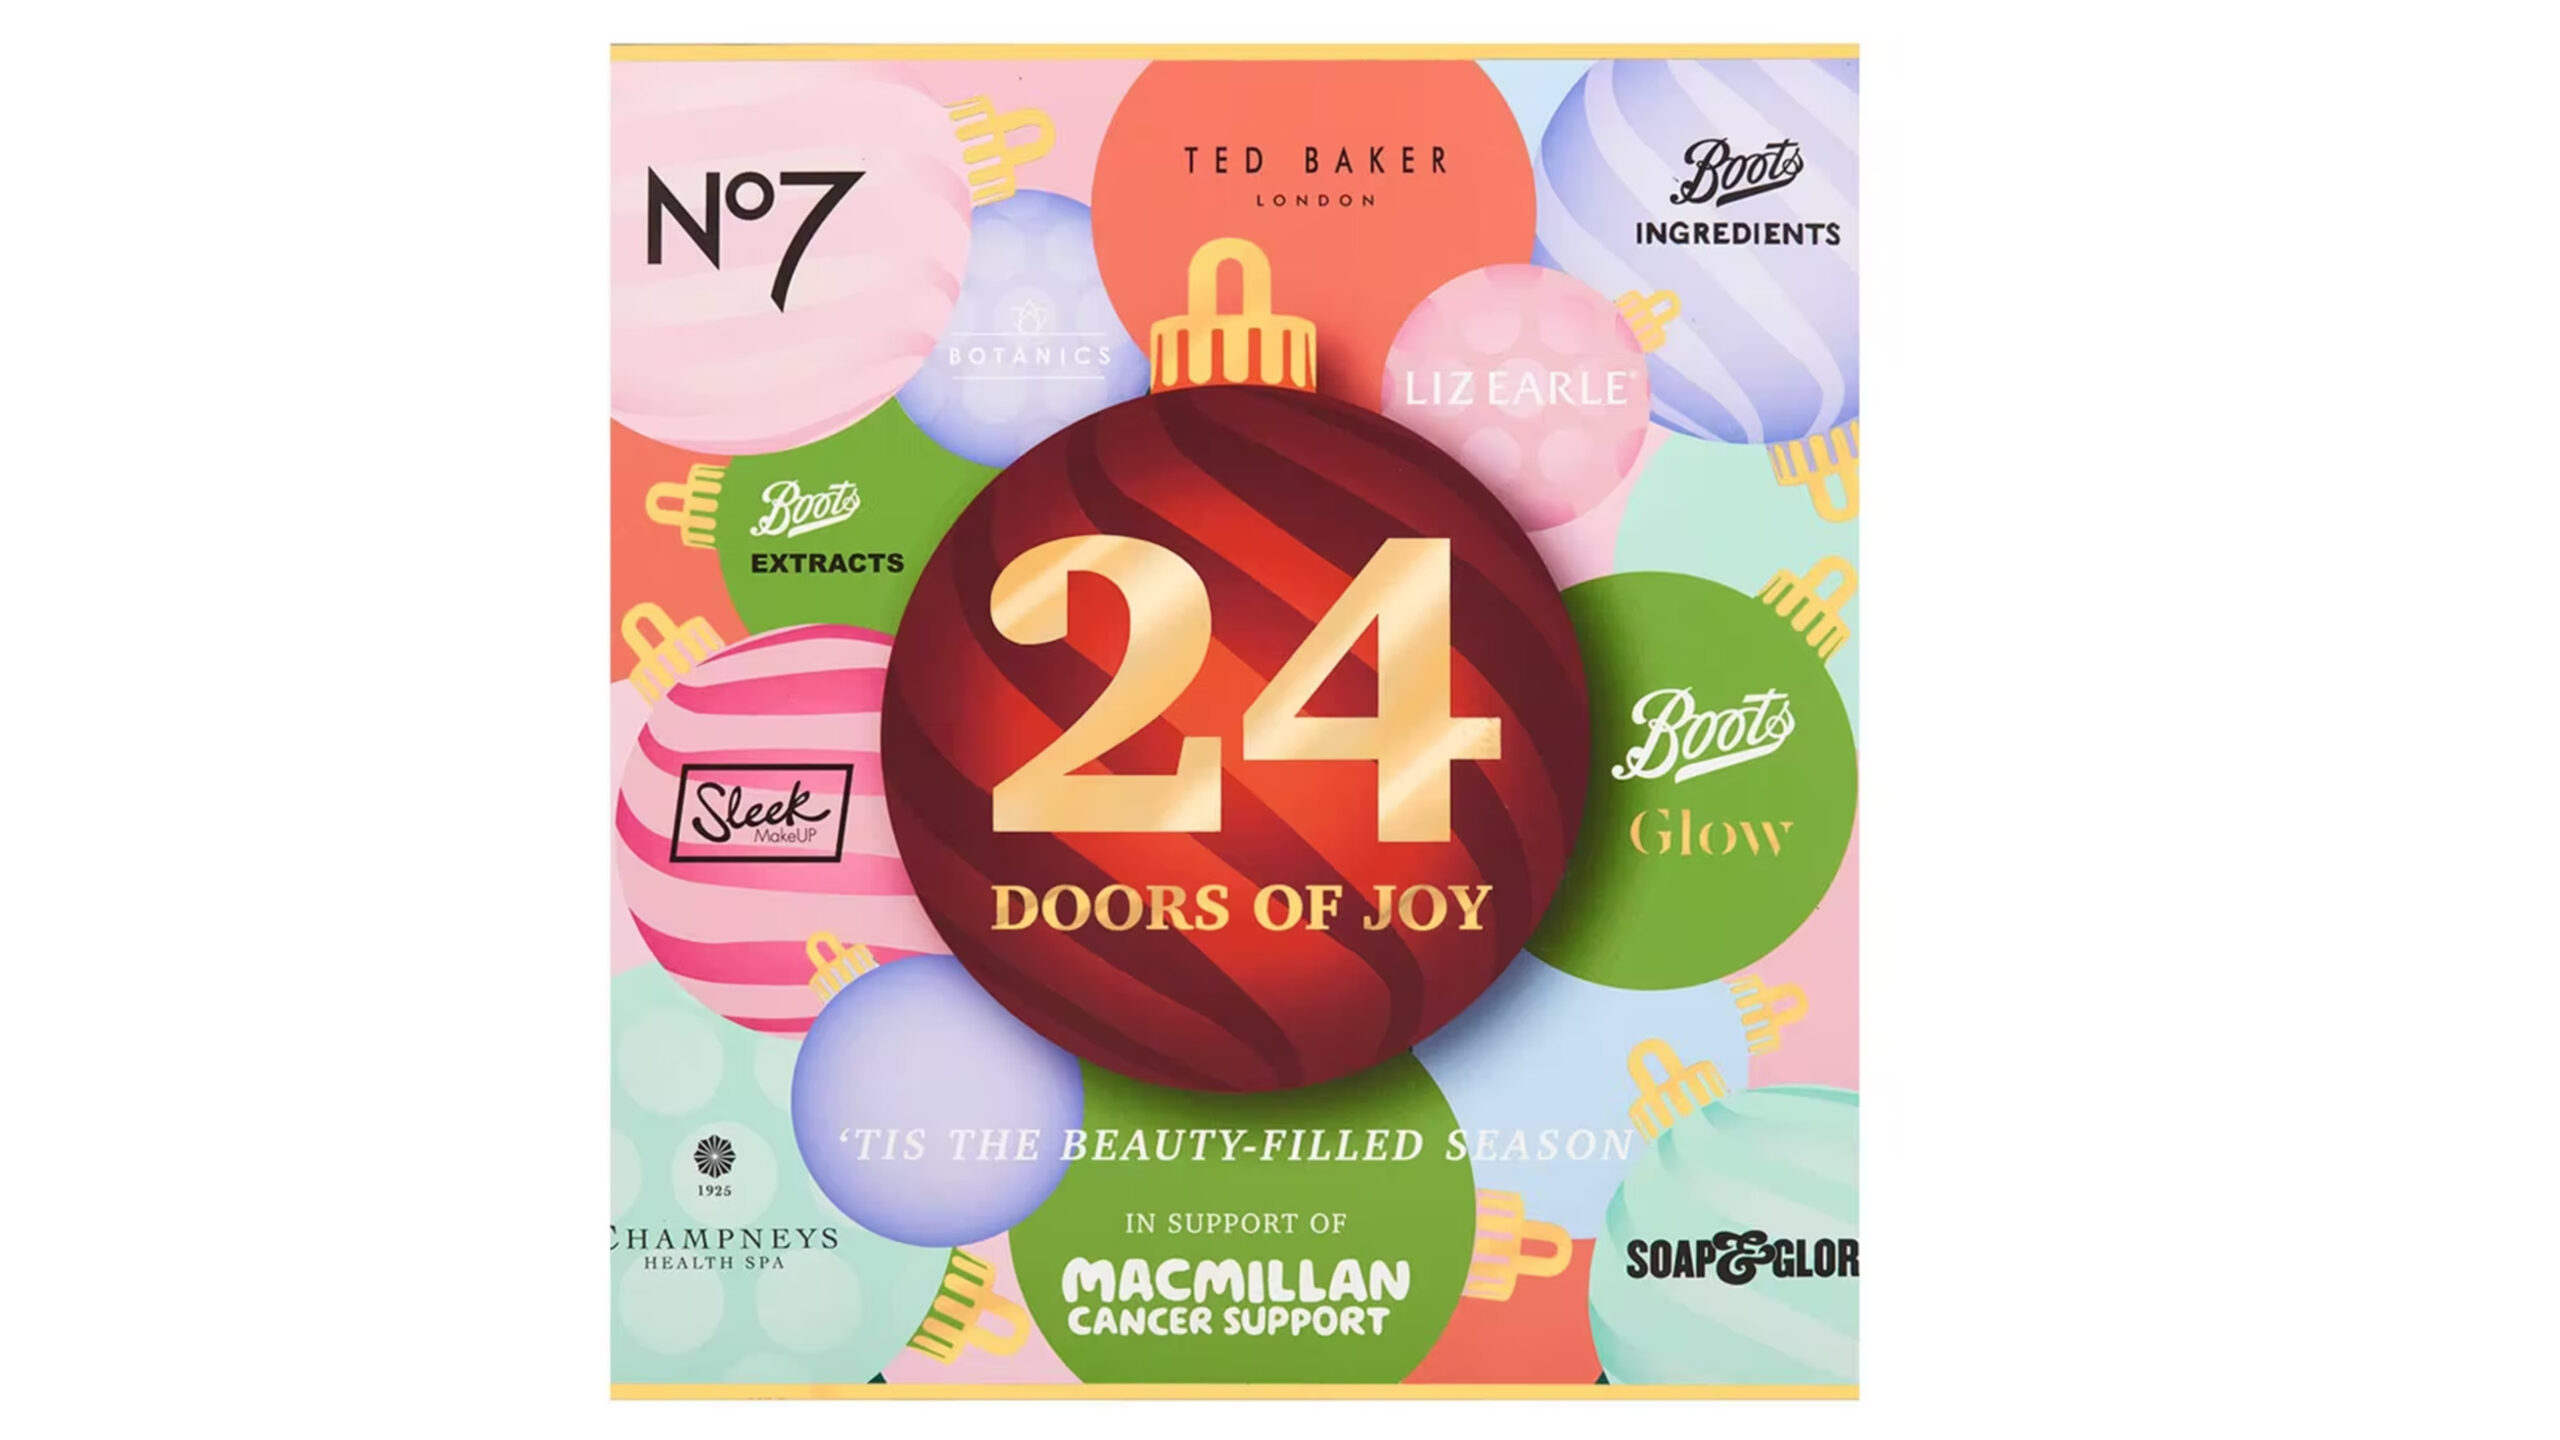 Boots Macmillan advent calendar 2023: What's inside? - mamabella